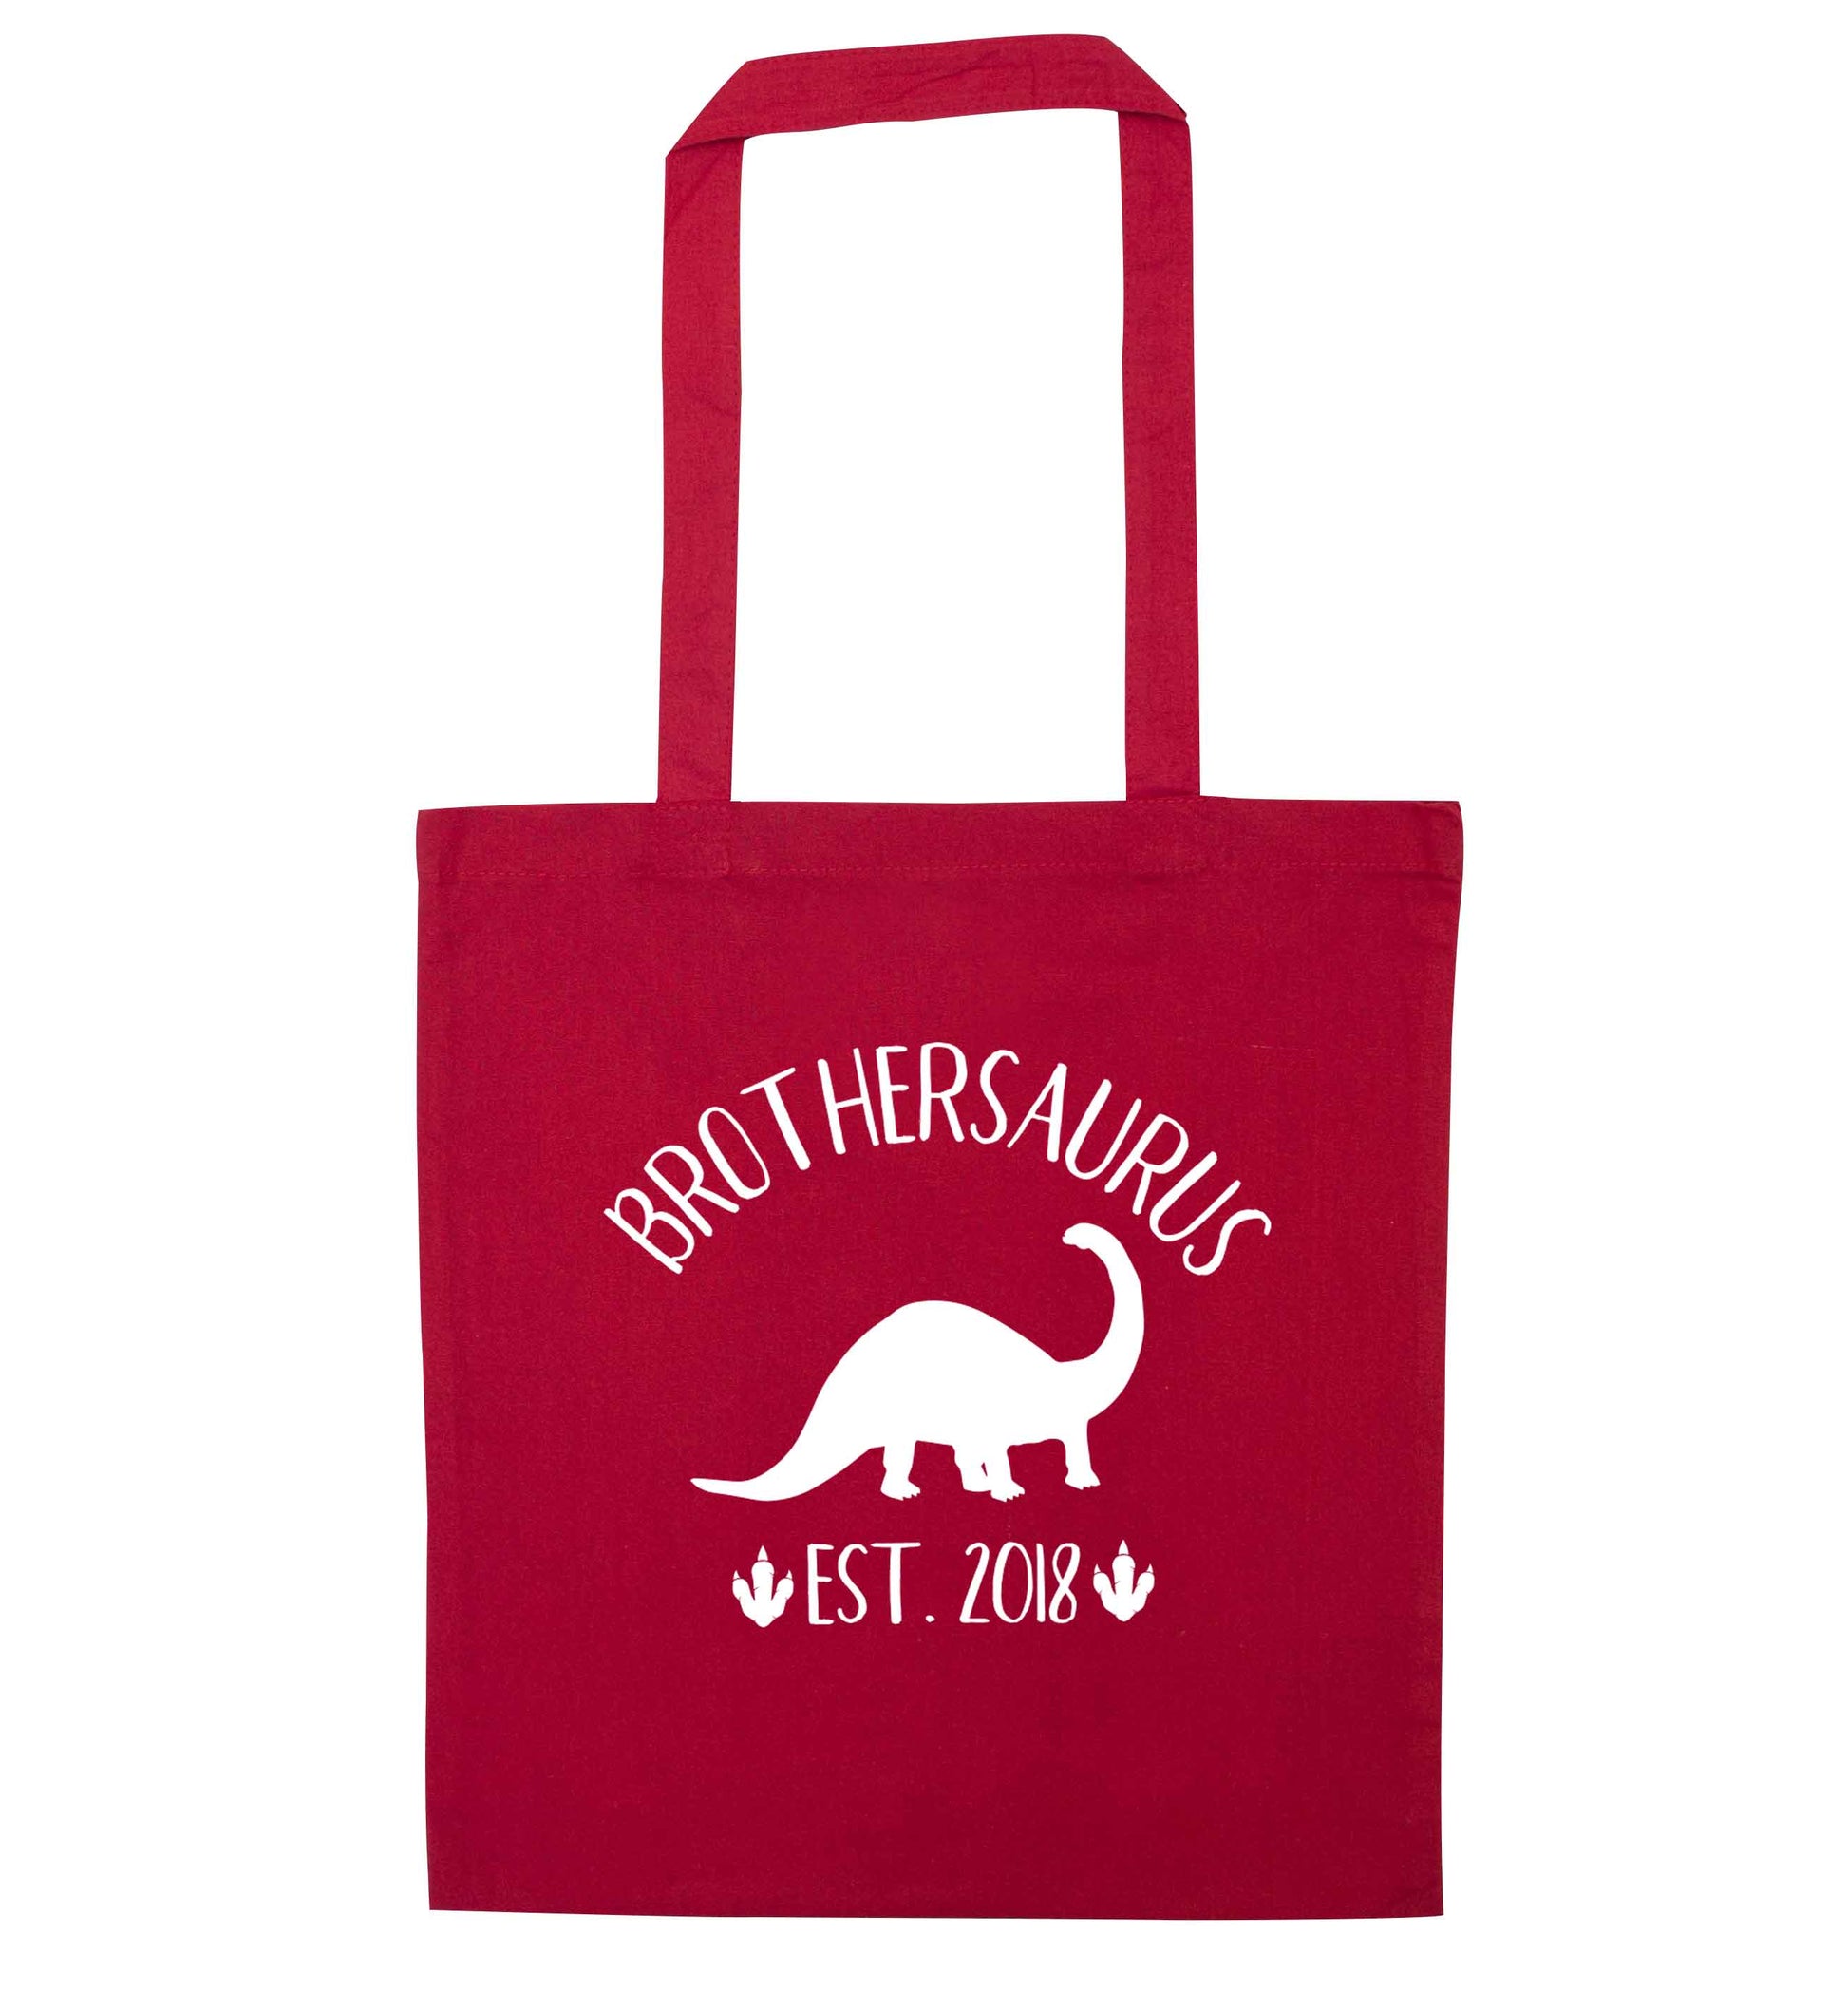 Personalised brothersaurus since (custom date) red tote bag